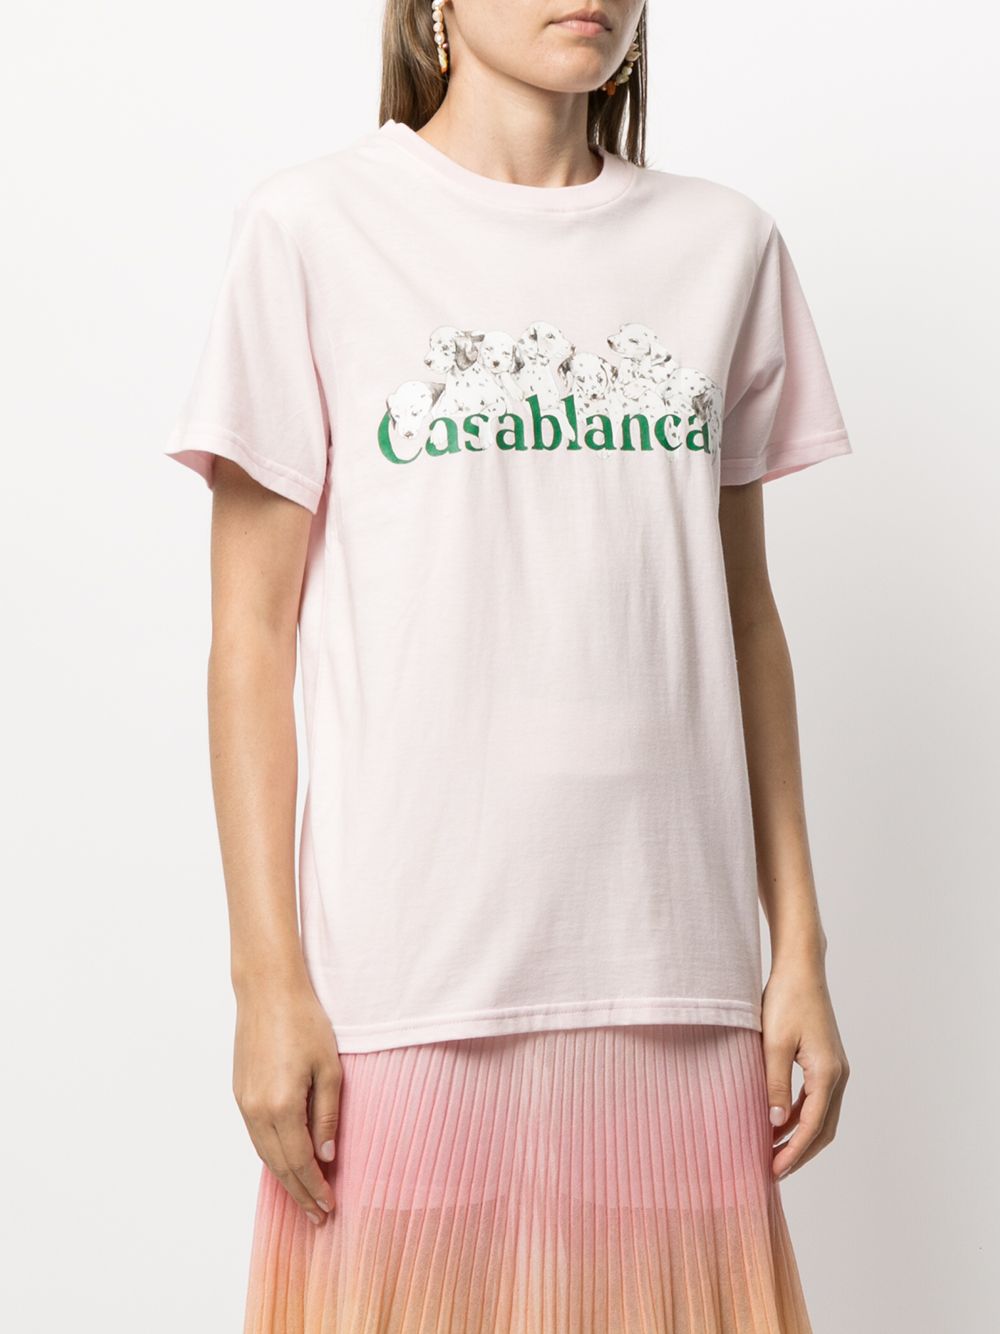 фото Casablanca футболка dalmatian с логотипом